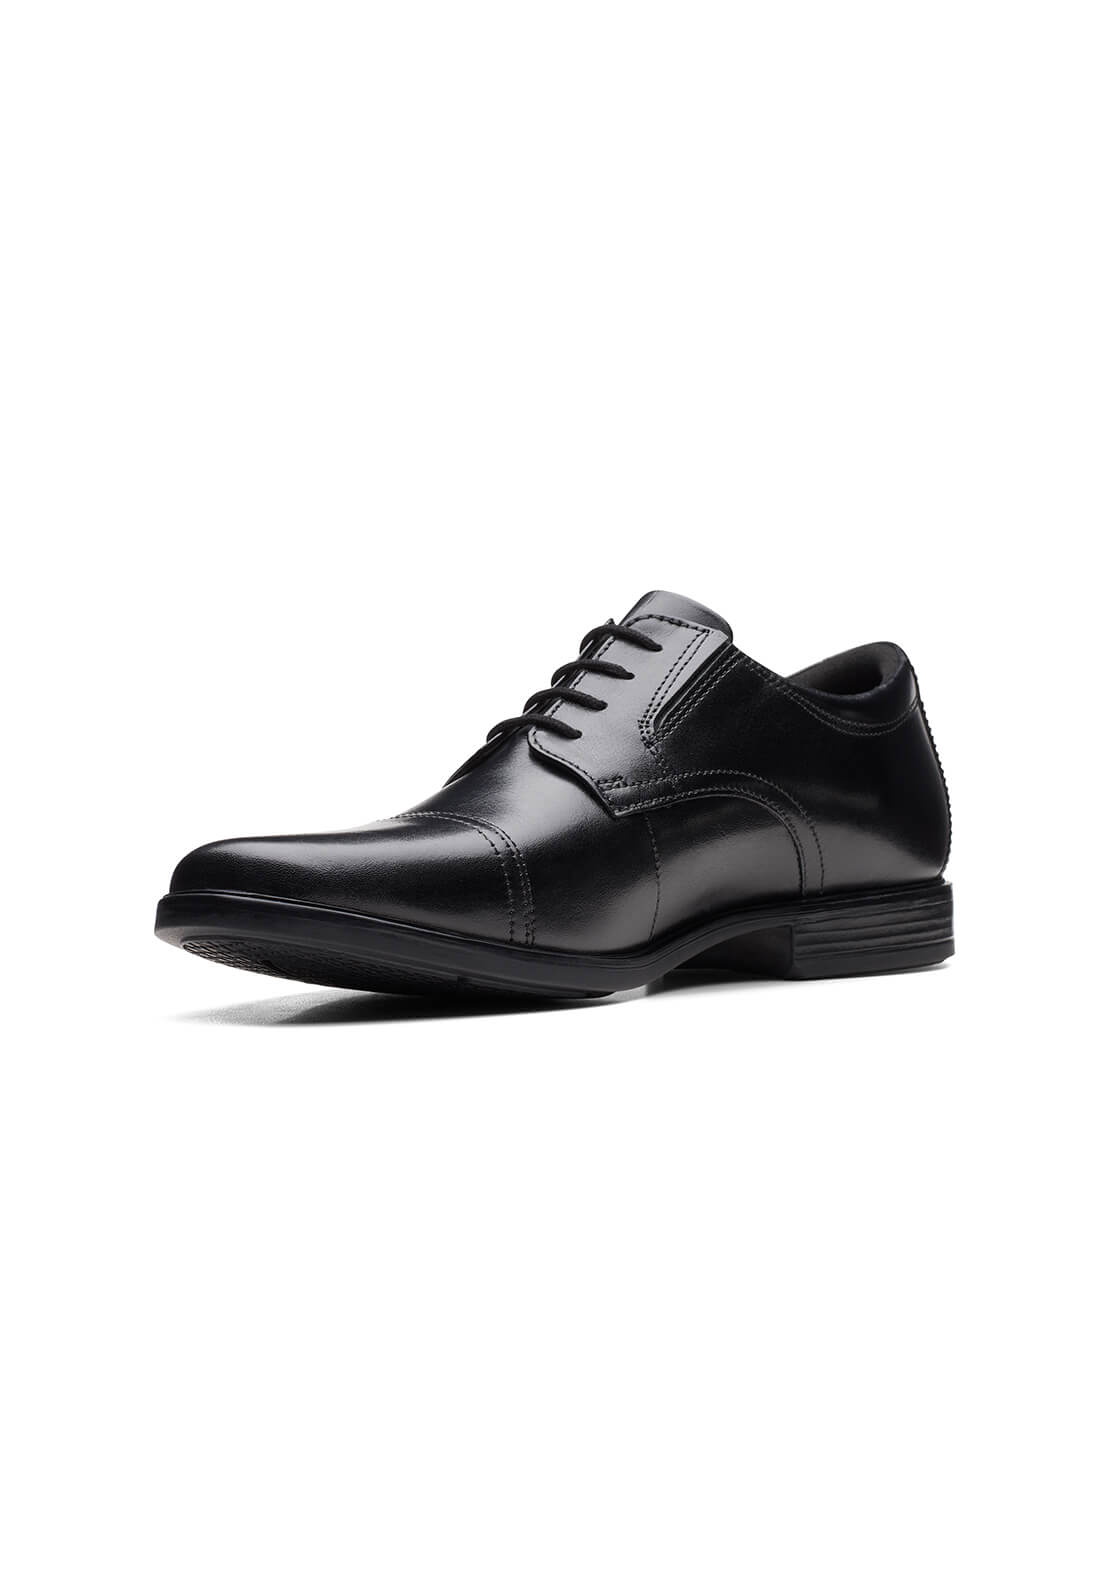 Clarks Howard Cap Formal Shoe - Black 2 Shaws Department Stores